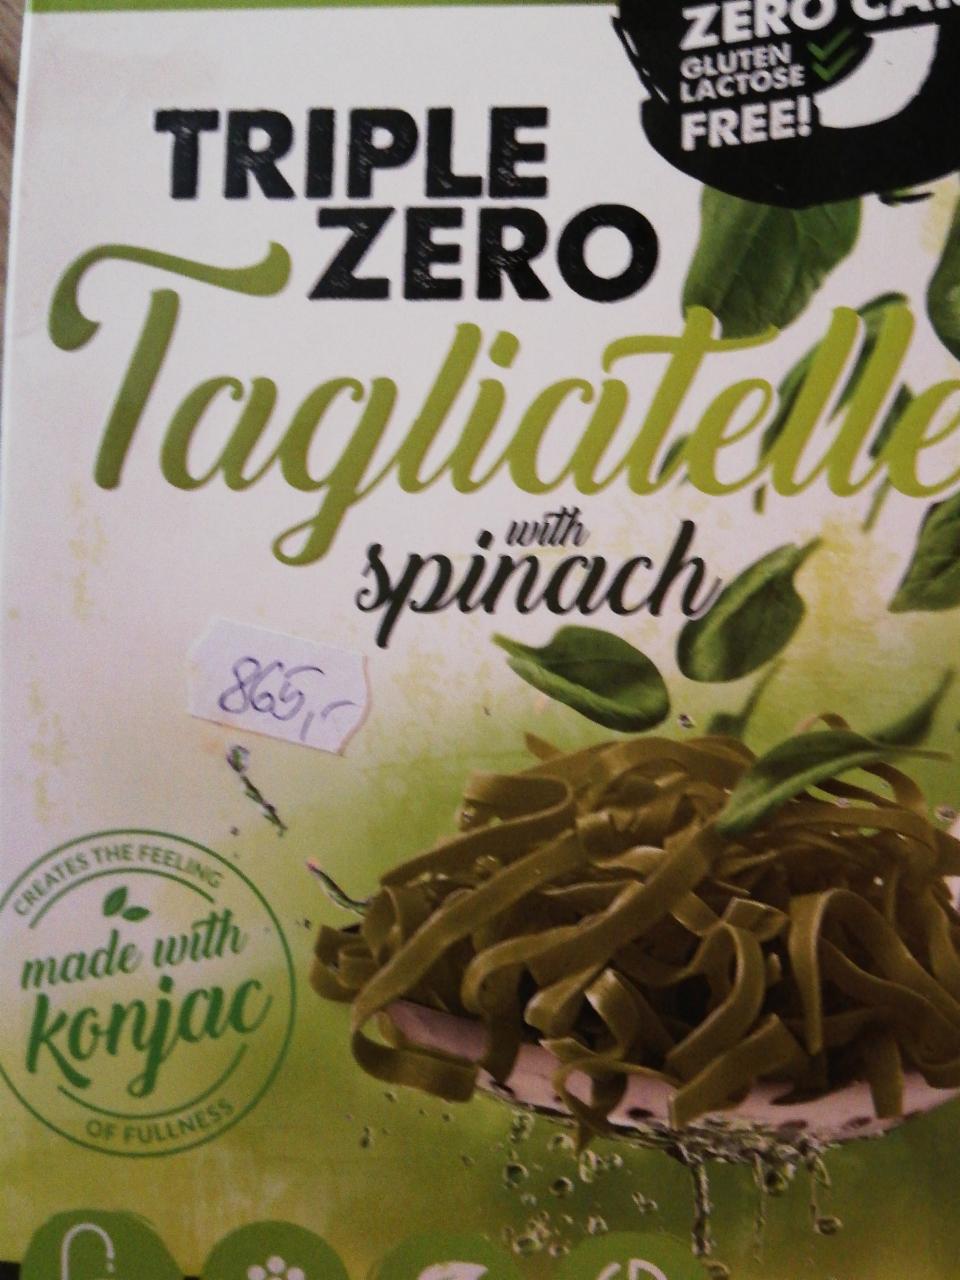 Képek - Tagliatelle spinach Triple Zero